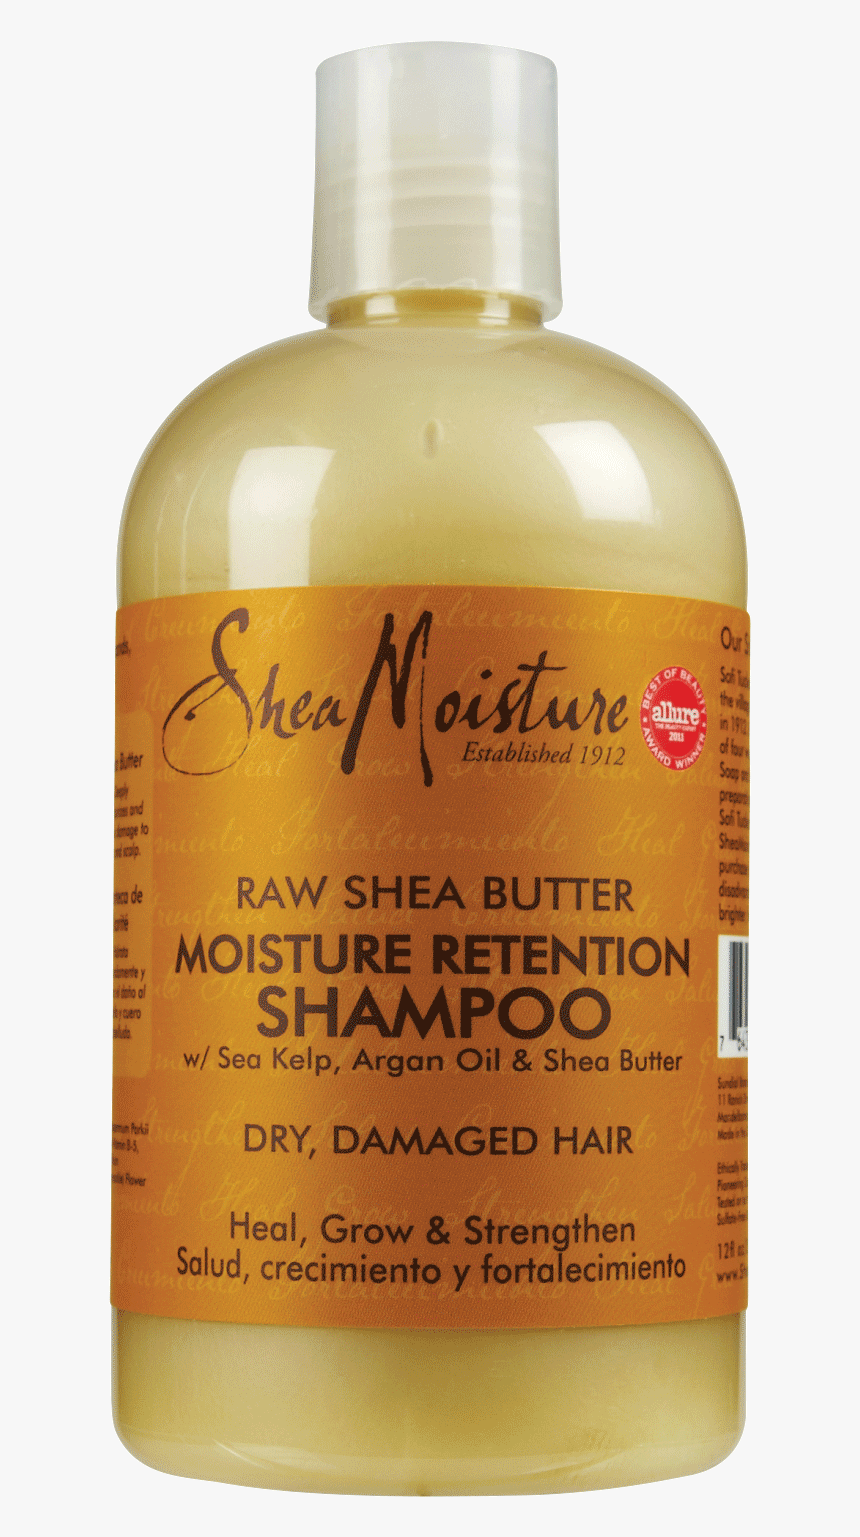 Transparent Shea Butter Png - Shea Moisture Raw Shea Butter Moisture Retention Shampoo, Png Download, Free Download